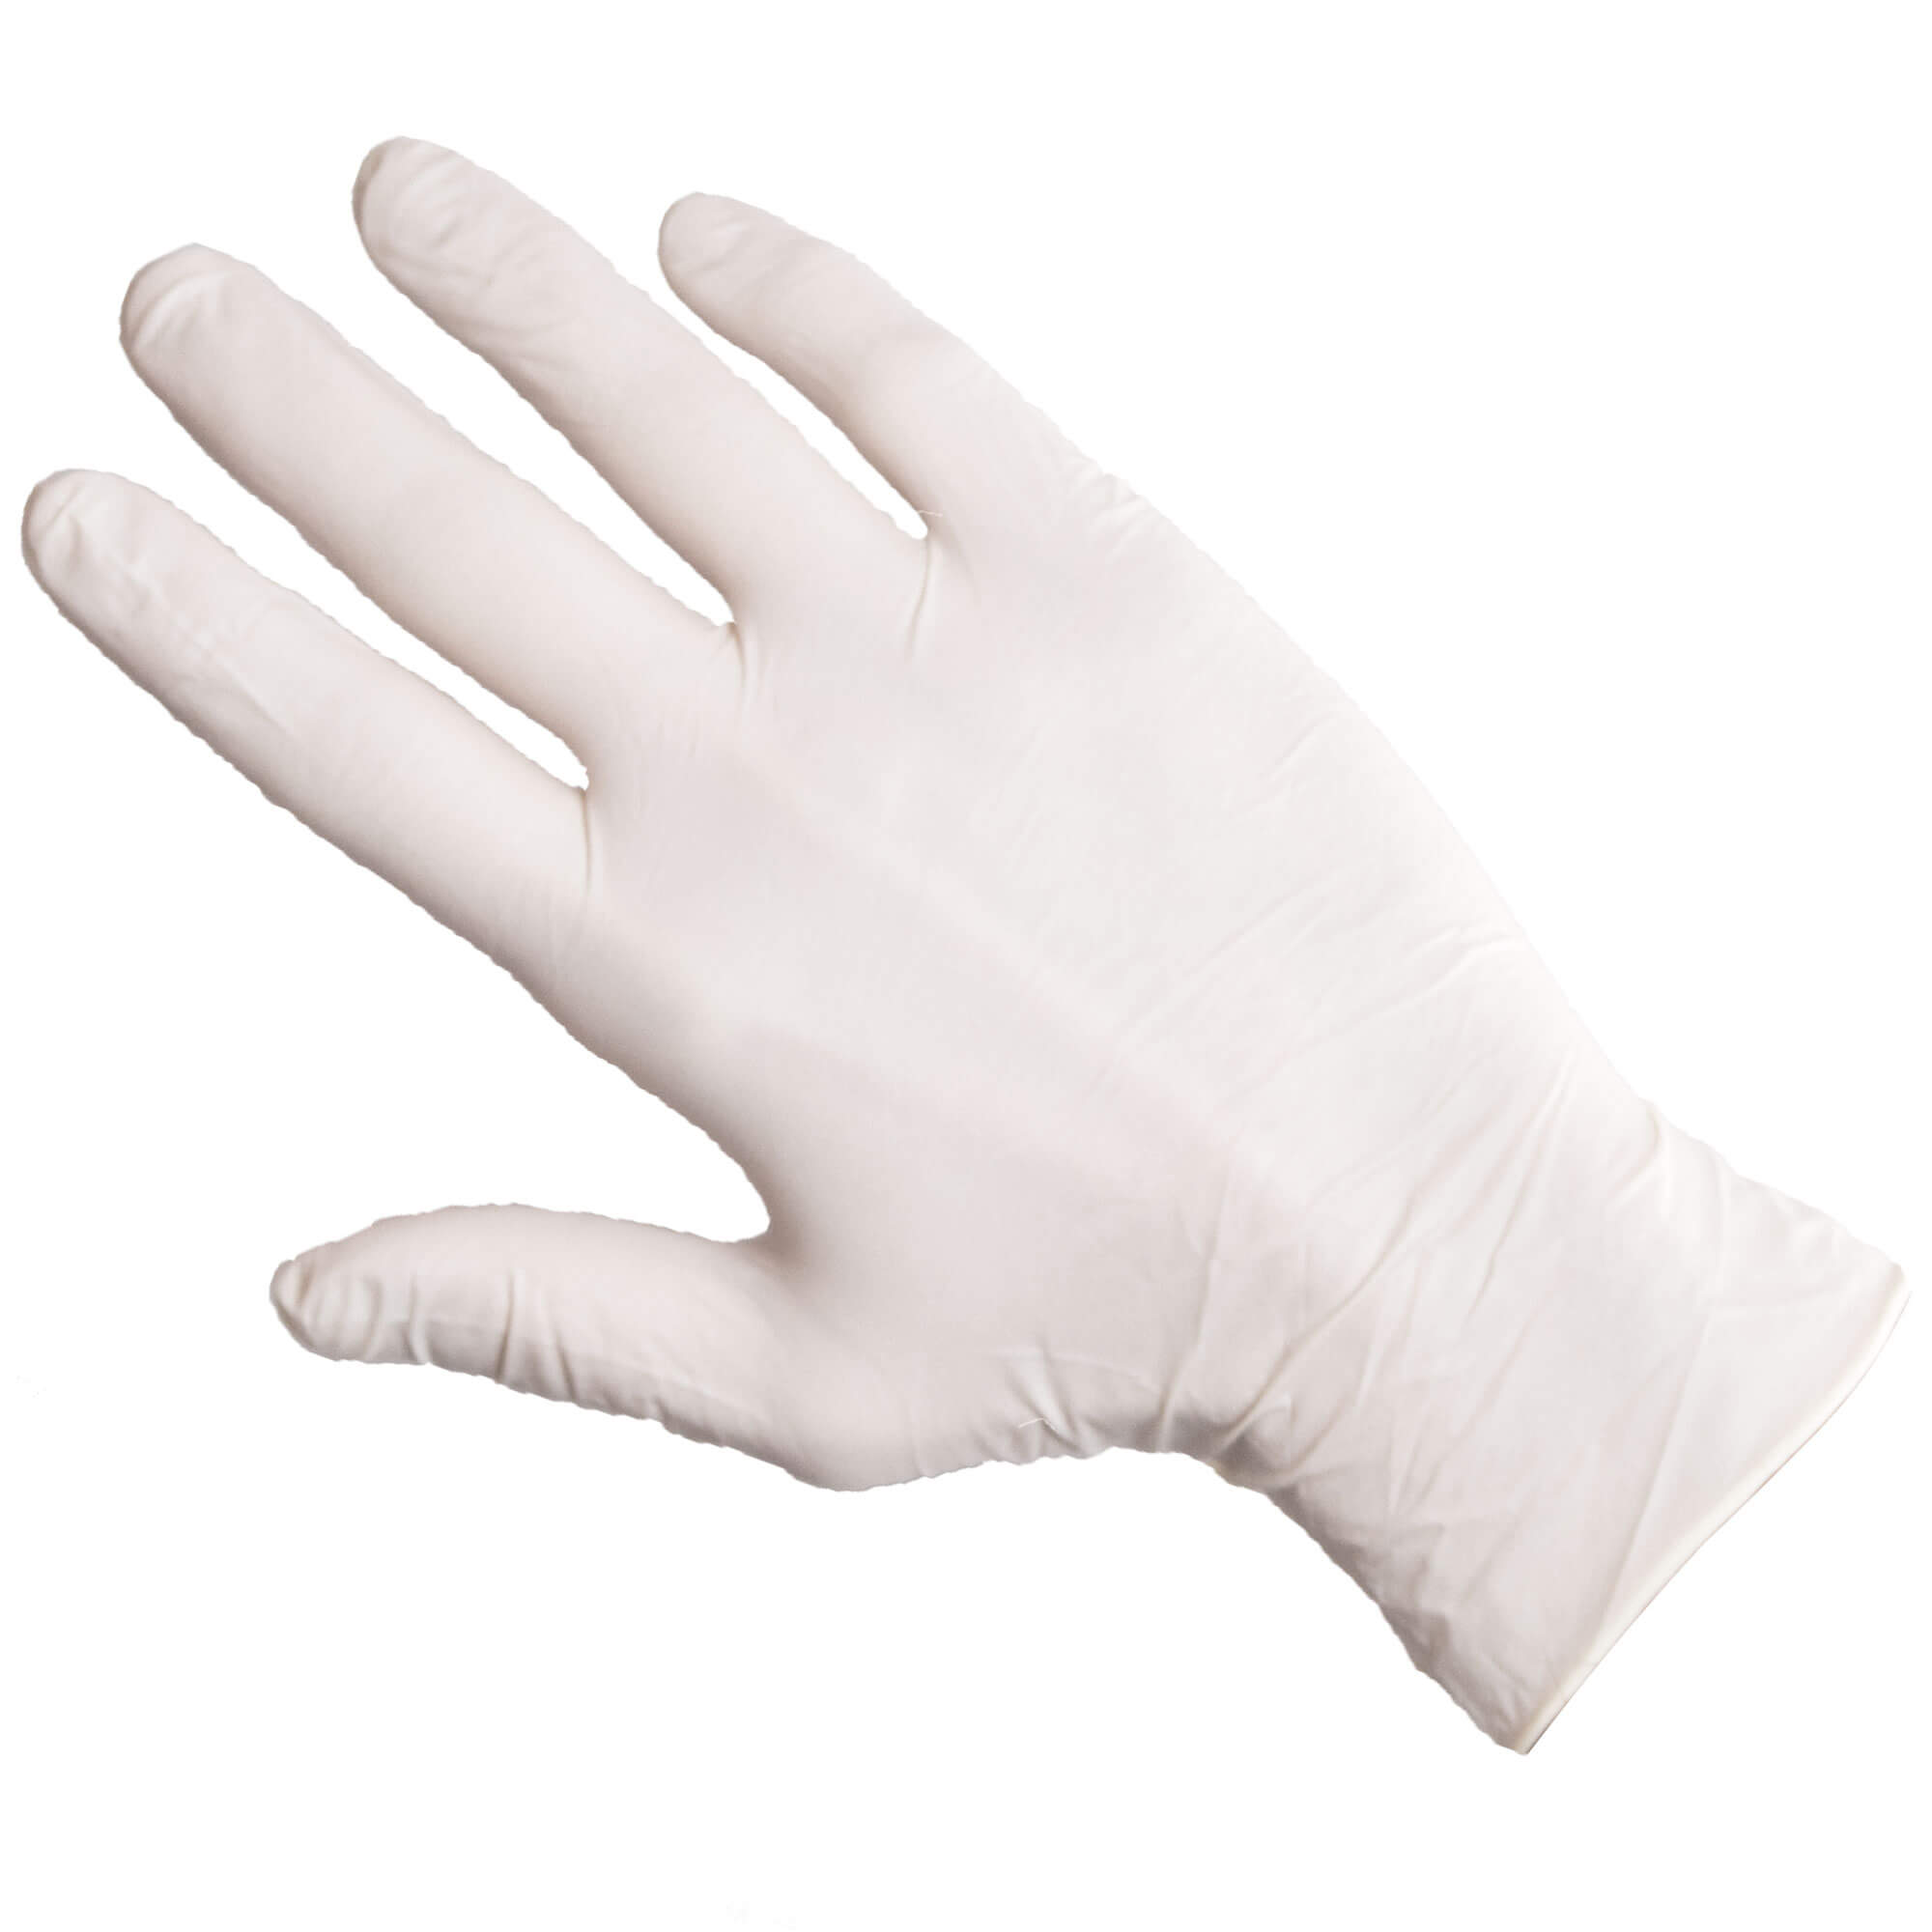 Handschuhe Nitril weiß - M (100 Stk.)